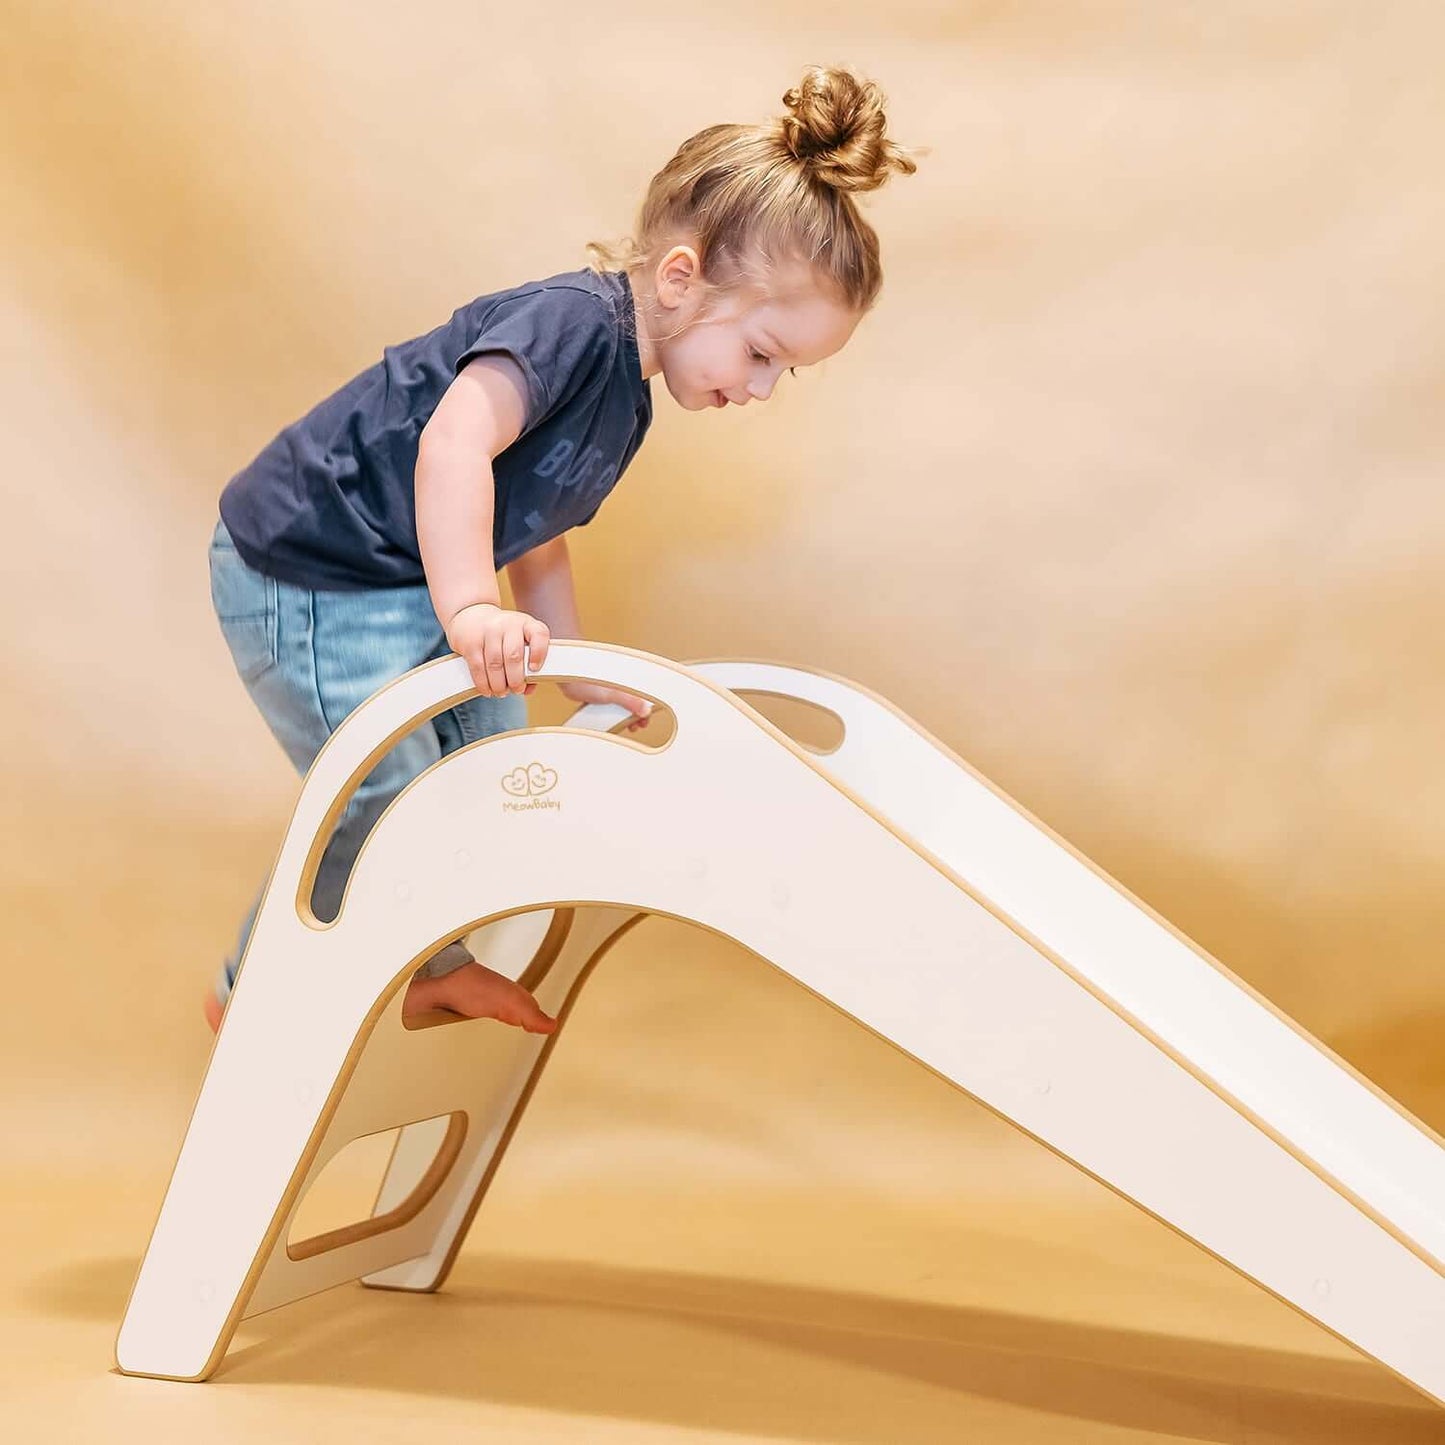 MeowBaby® Montessori slide "Junior" made of wood for small children